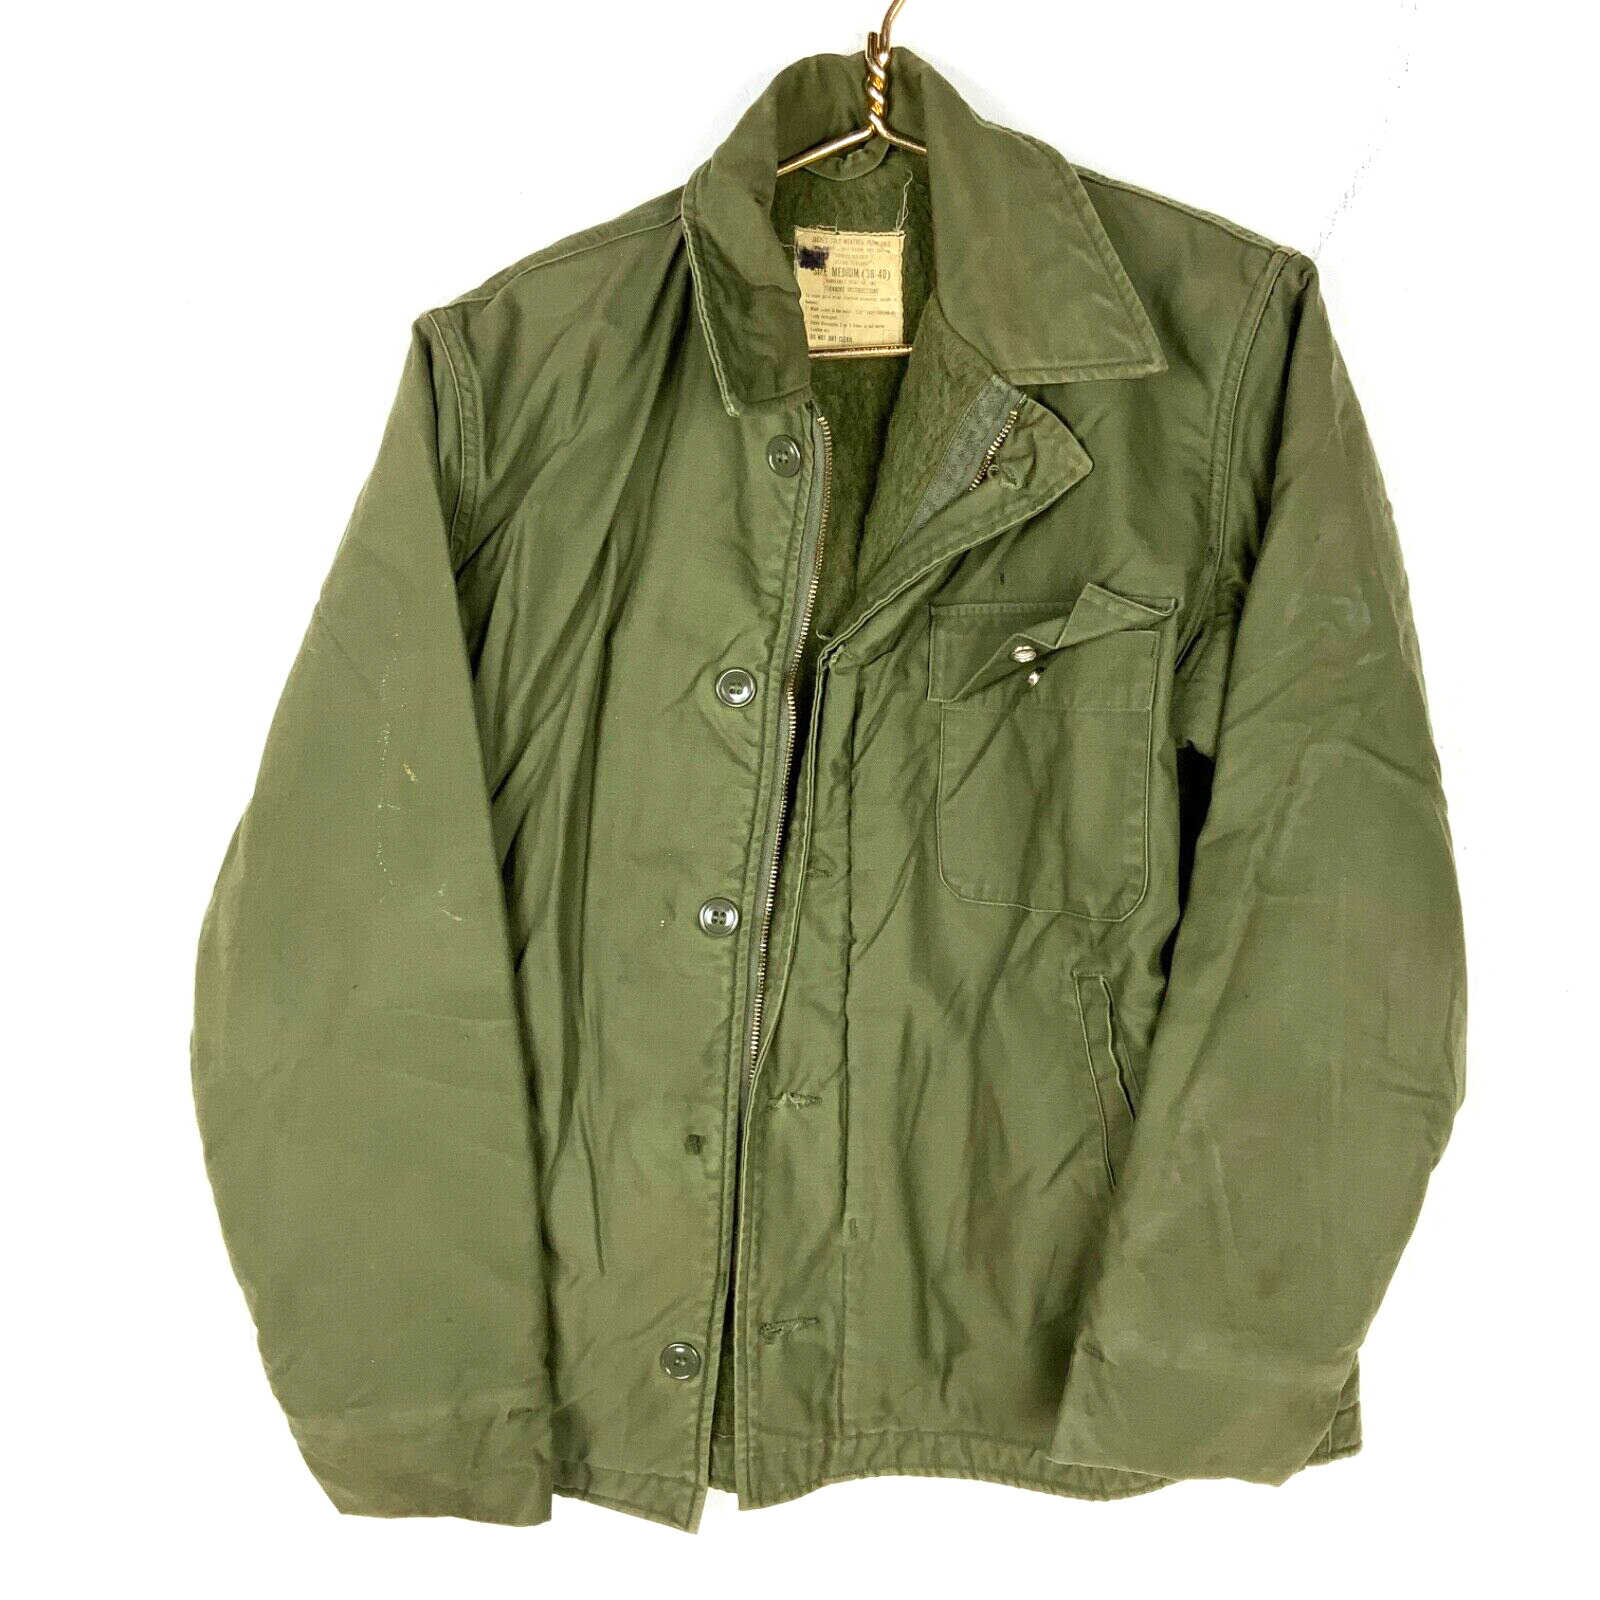 Vintage Us Military Cold Weather Deck Jacket Size Medium Green Vietnam Era 1975